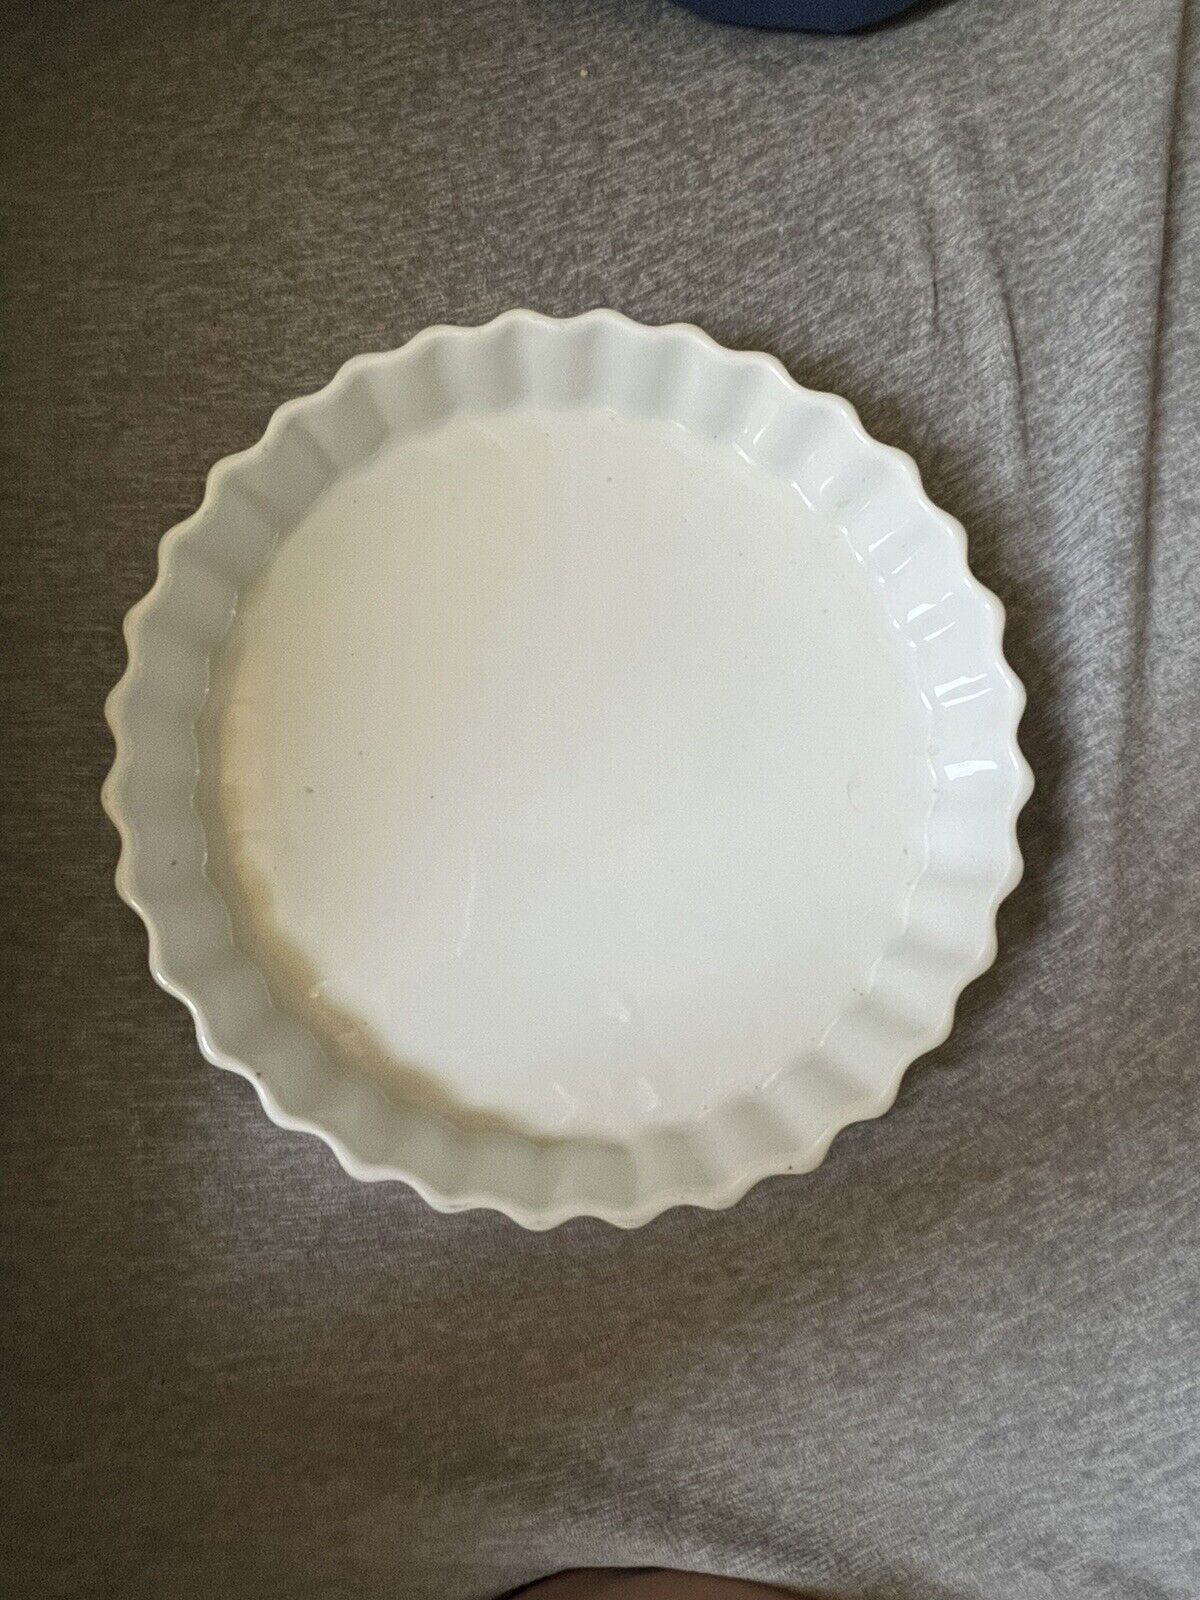 White 9.5” quiche dish